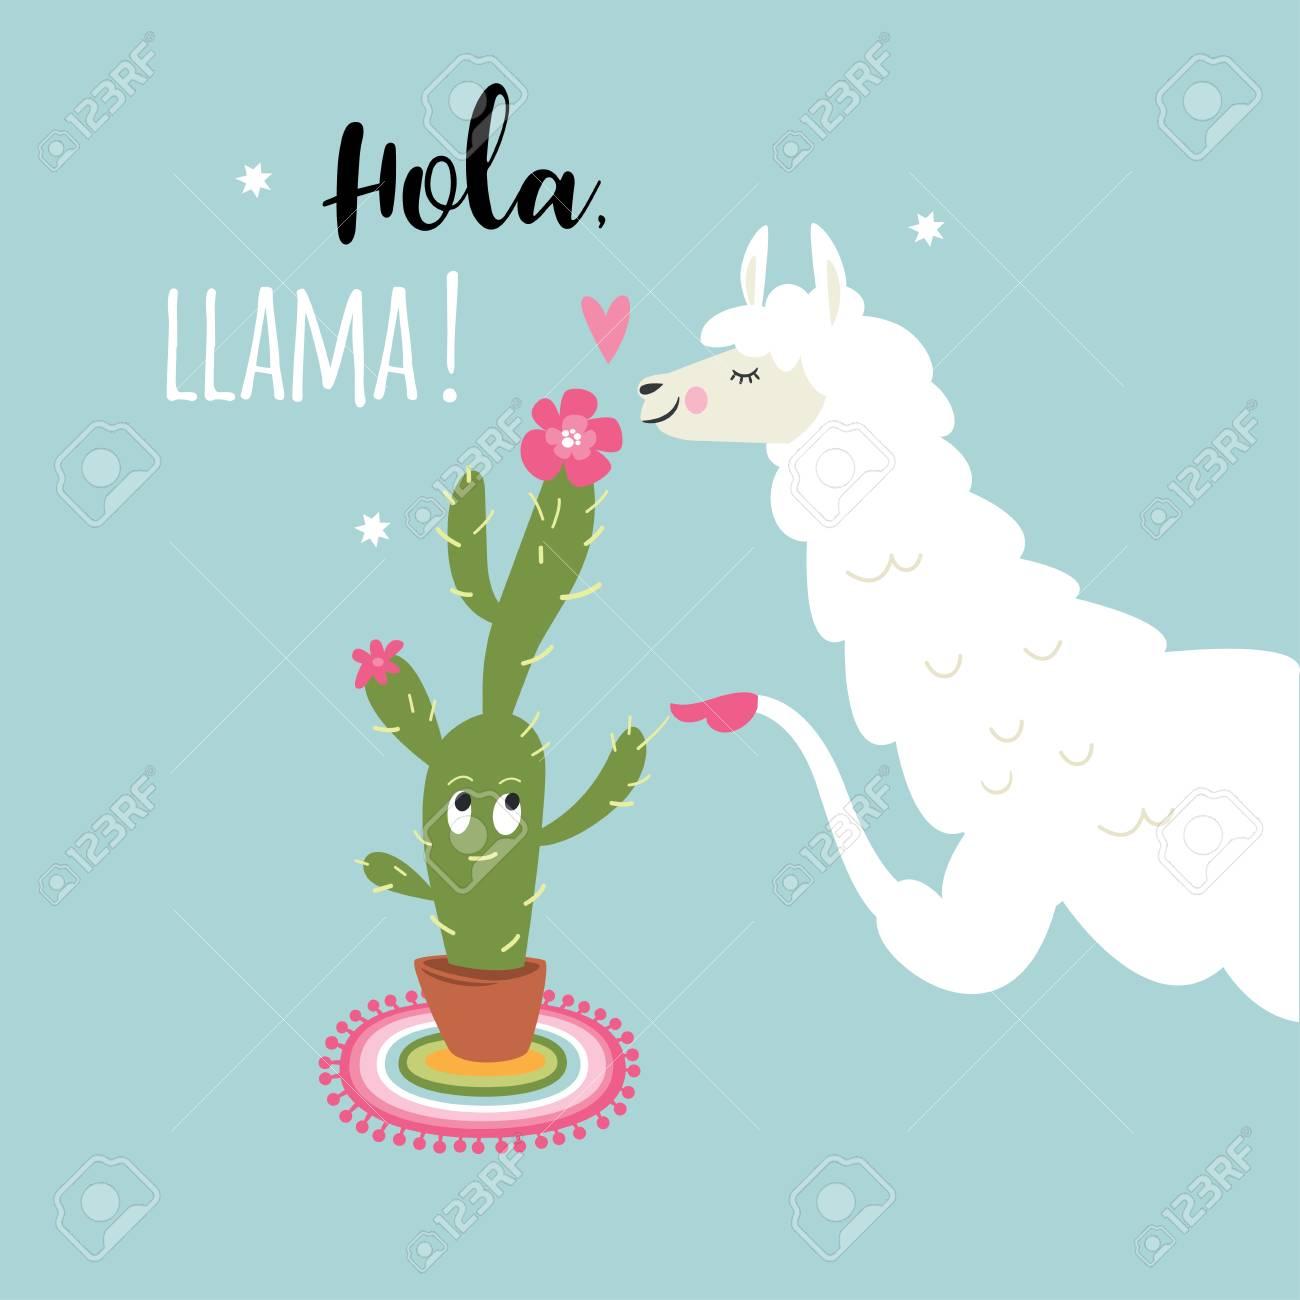 Free download Cute Llama Illustration On Blue Background Royalty